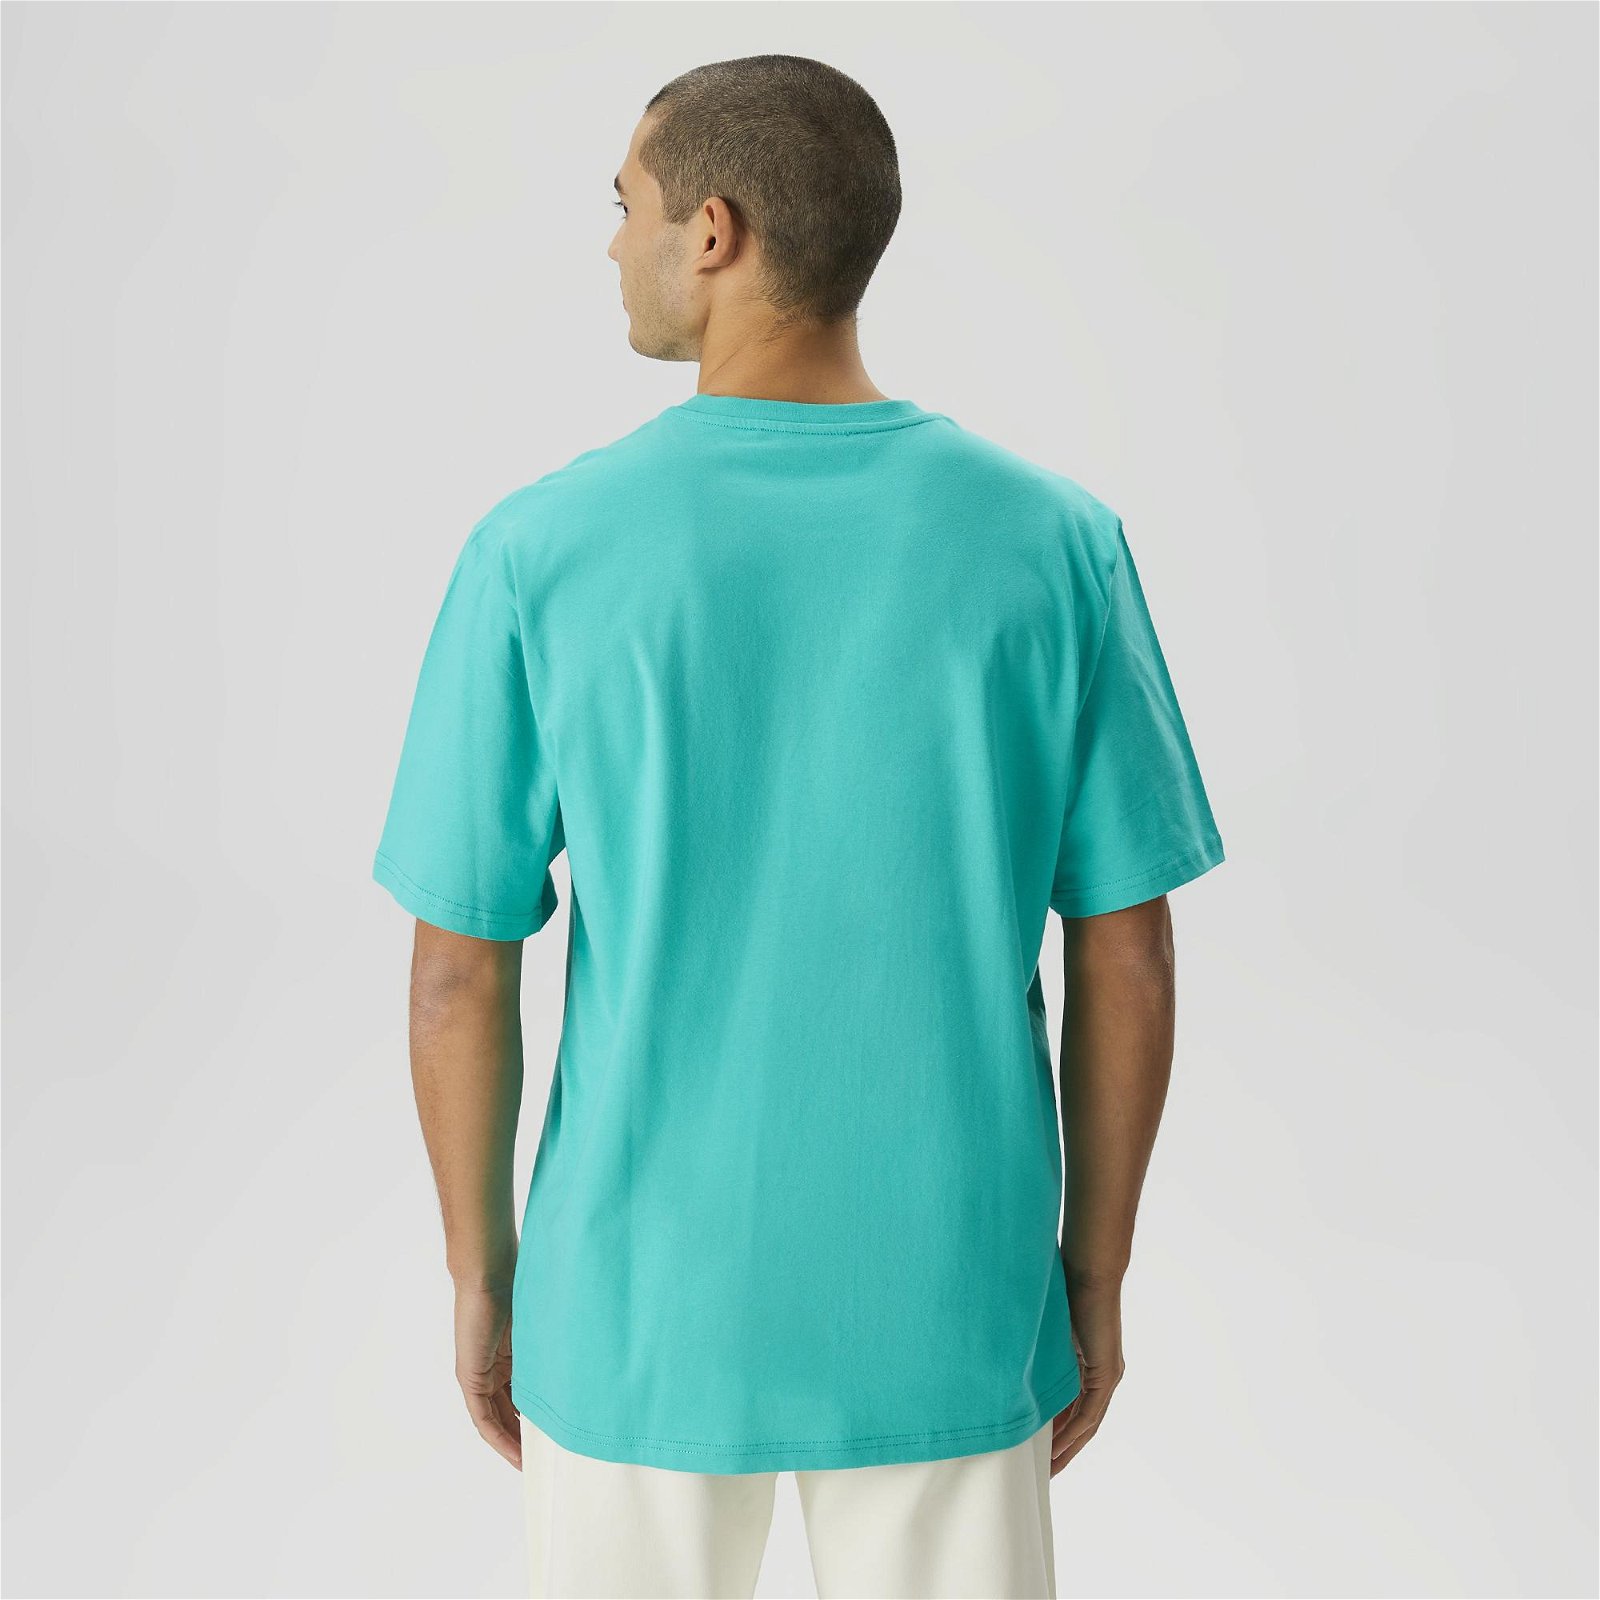 Les Benjamins 303 Erkek Yeşil T-Shirt